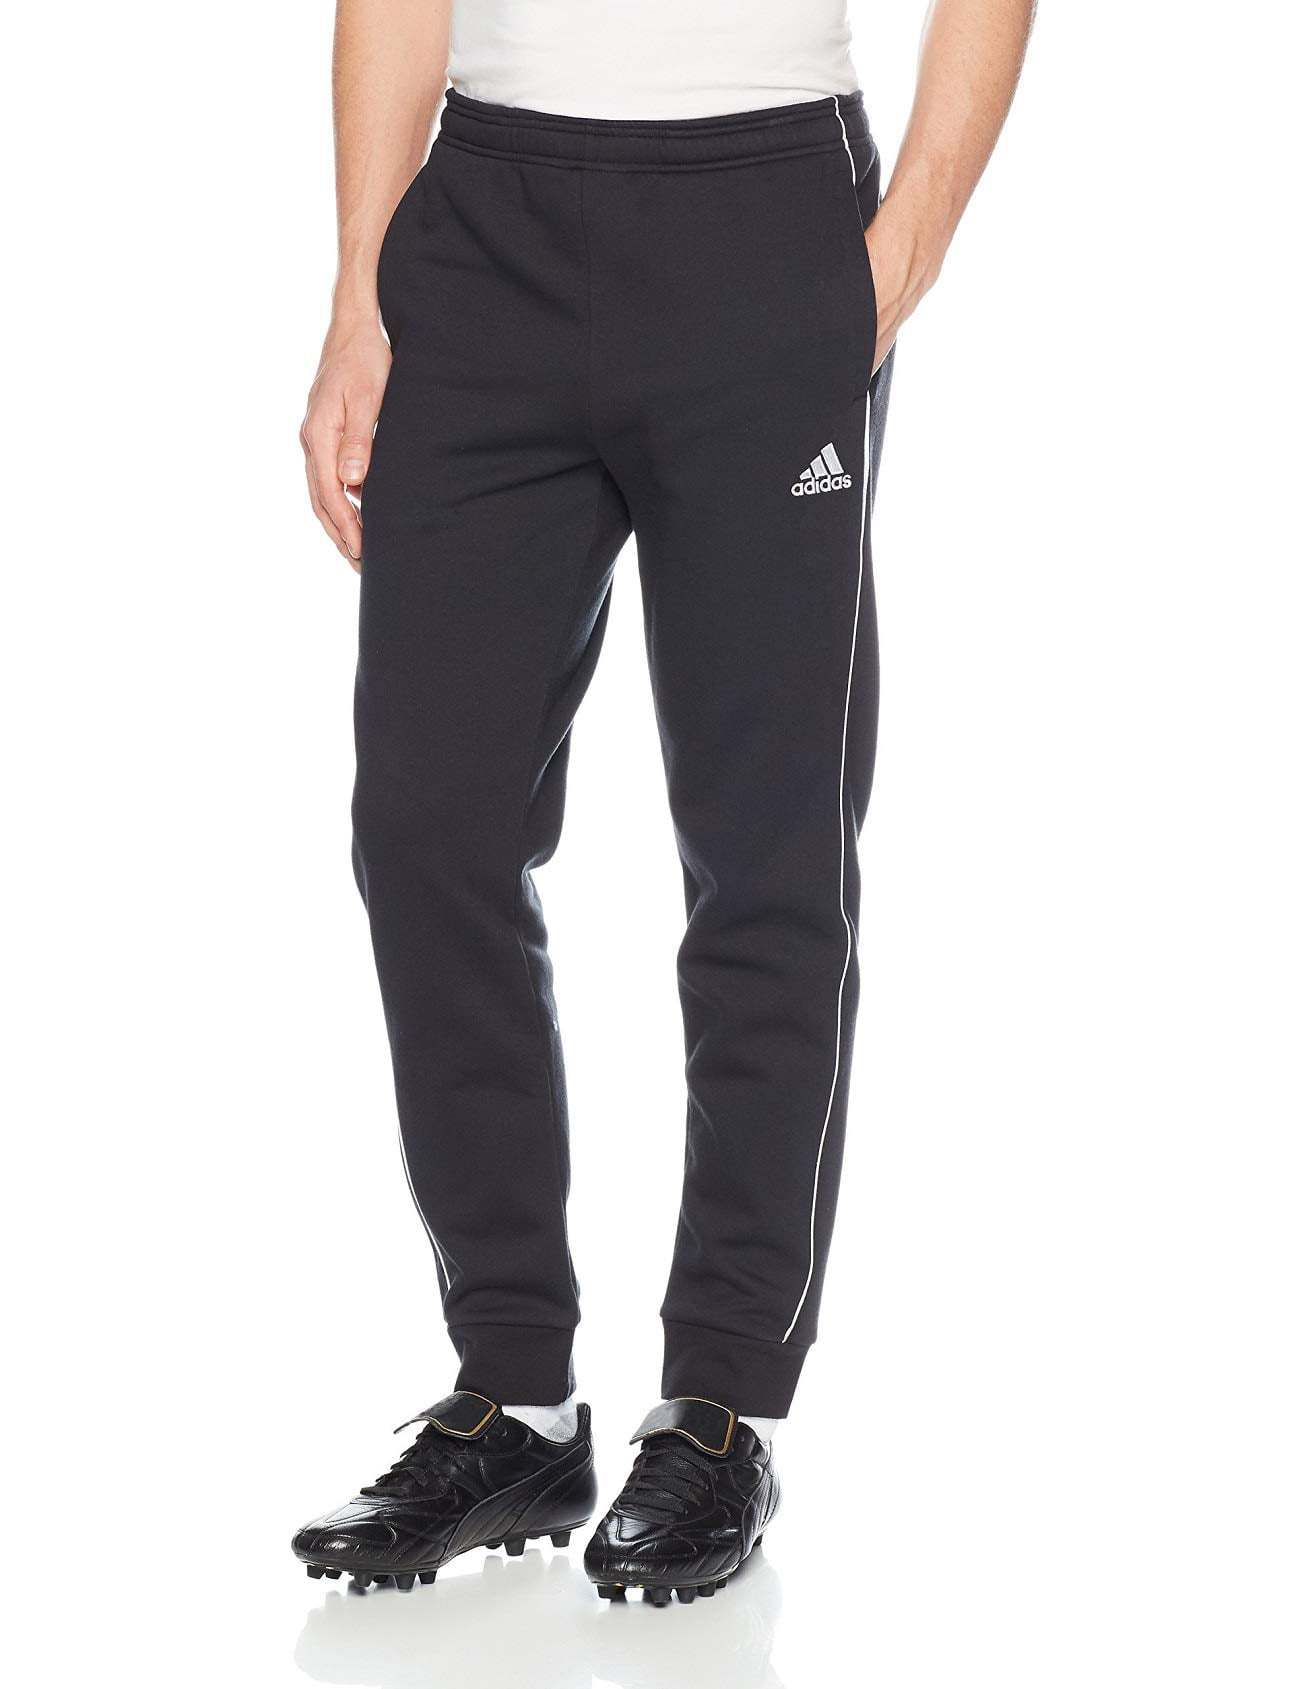 adidas mens Core 18 Slim Fit Full Length Soccer Training Joggers Sweatpants, Black/White, - Walmart.com